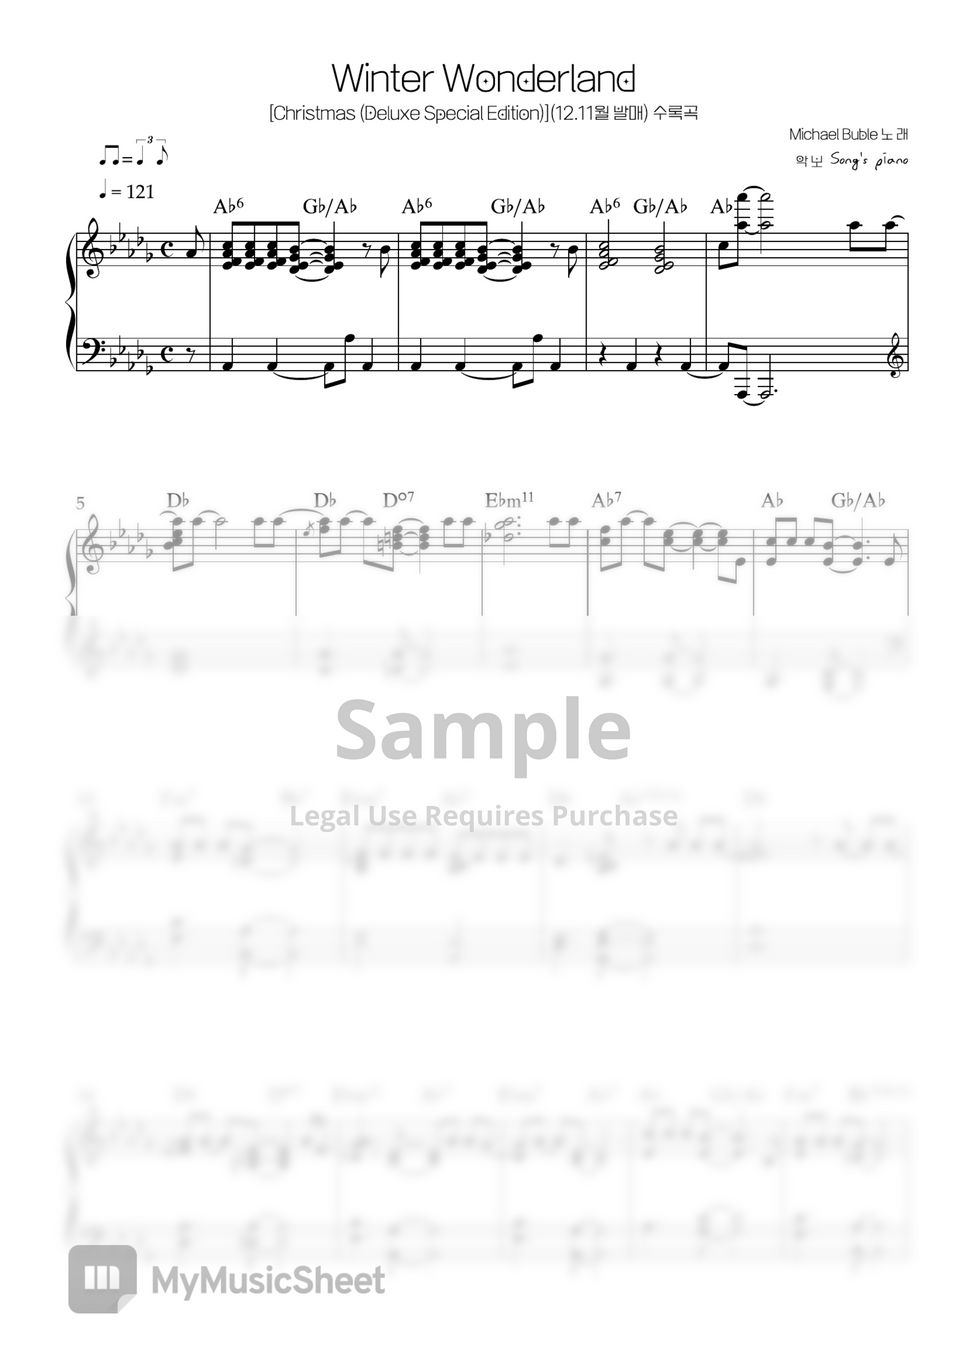 Michael Buble - Winter Wonderland (피아노 커버/ 코드 포함) by Song's piano